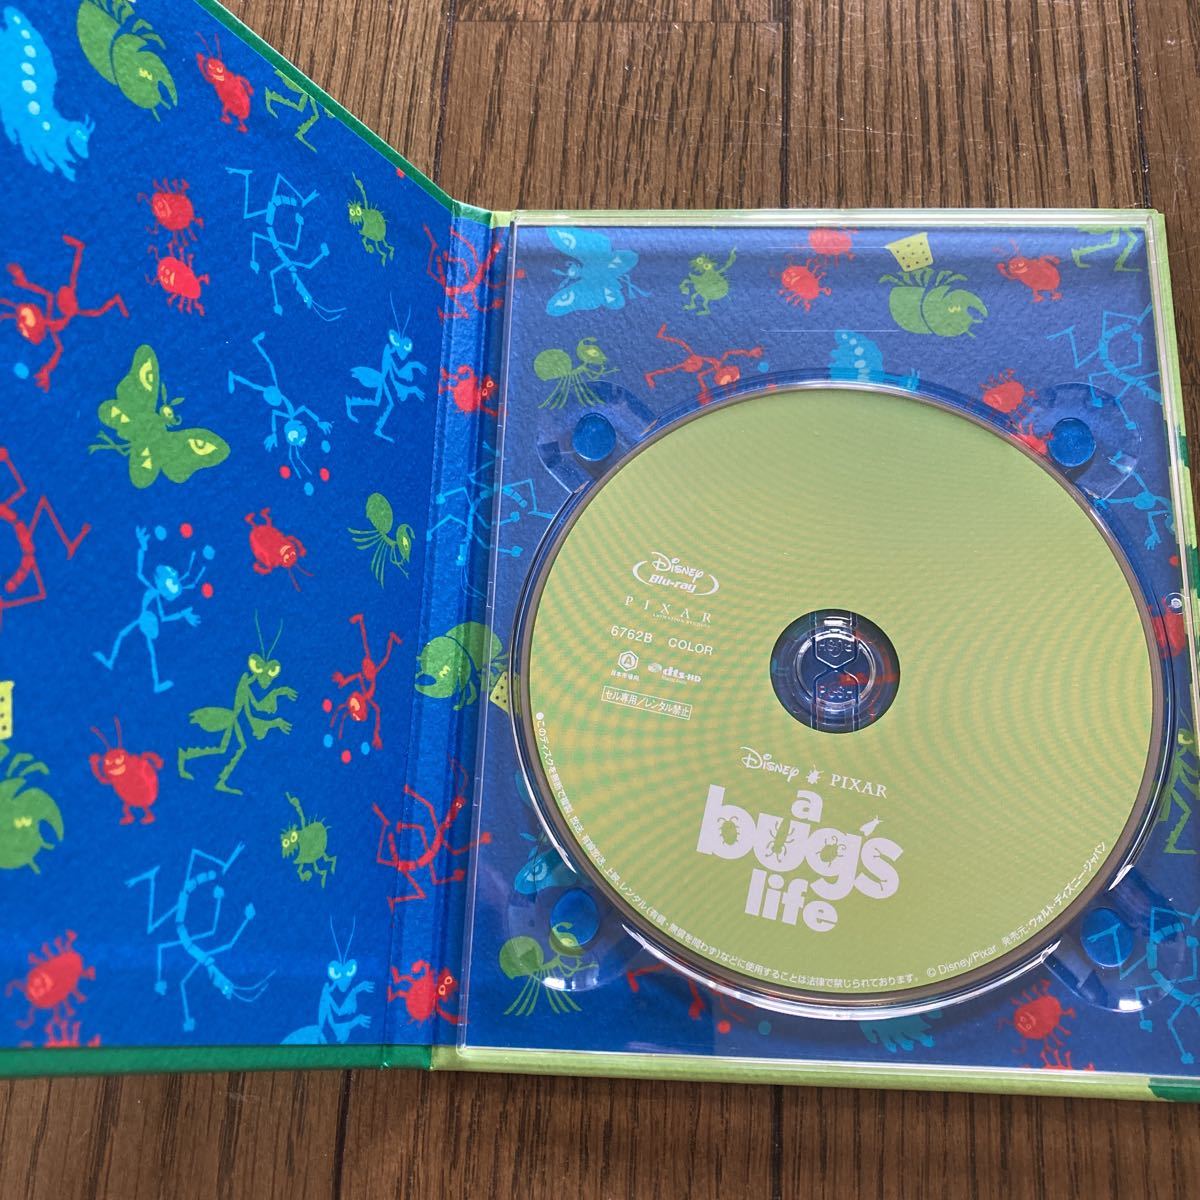 bagz* жизнь Blue-ray Disney /piksa-20 название коллекция 